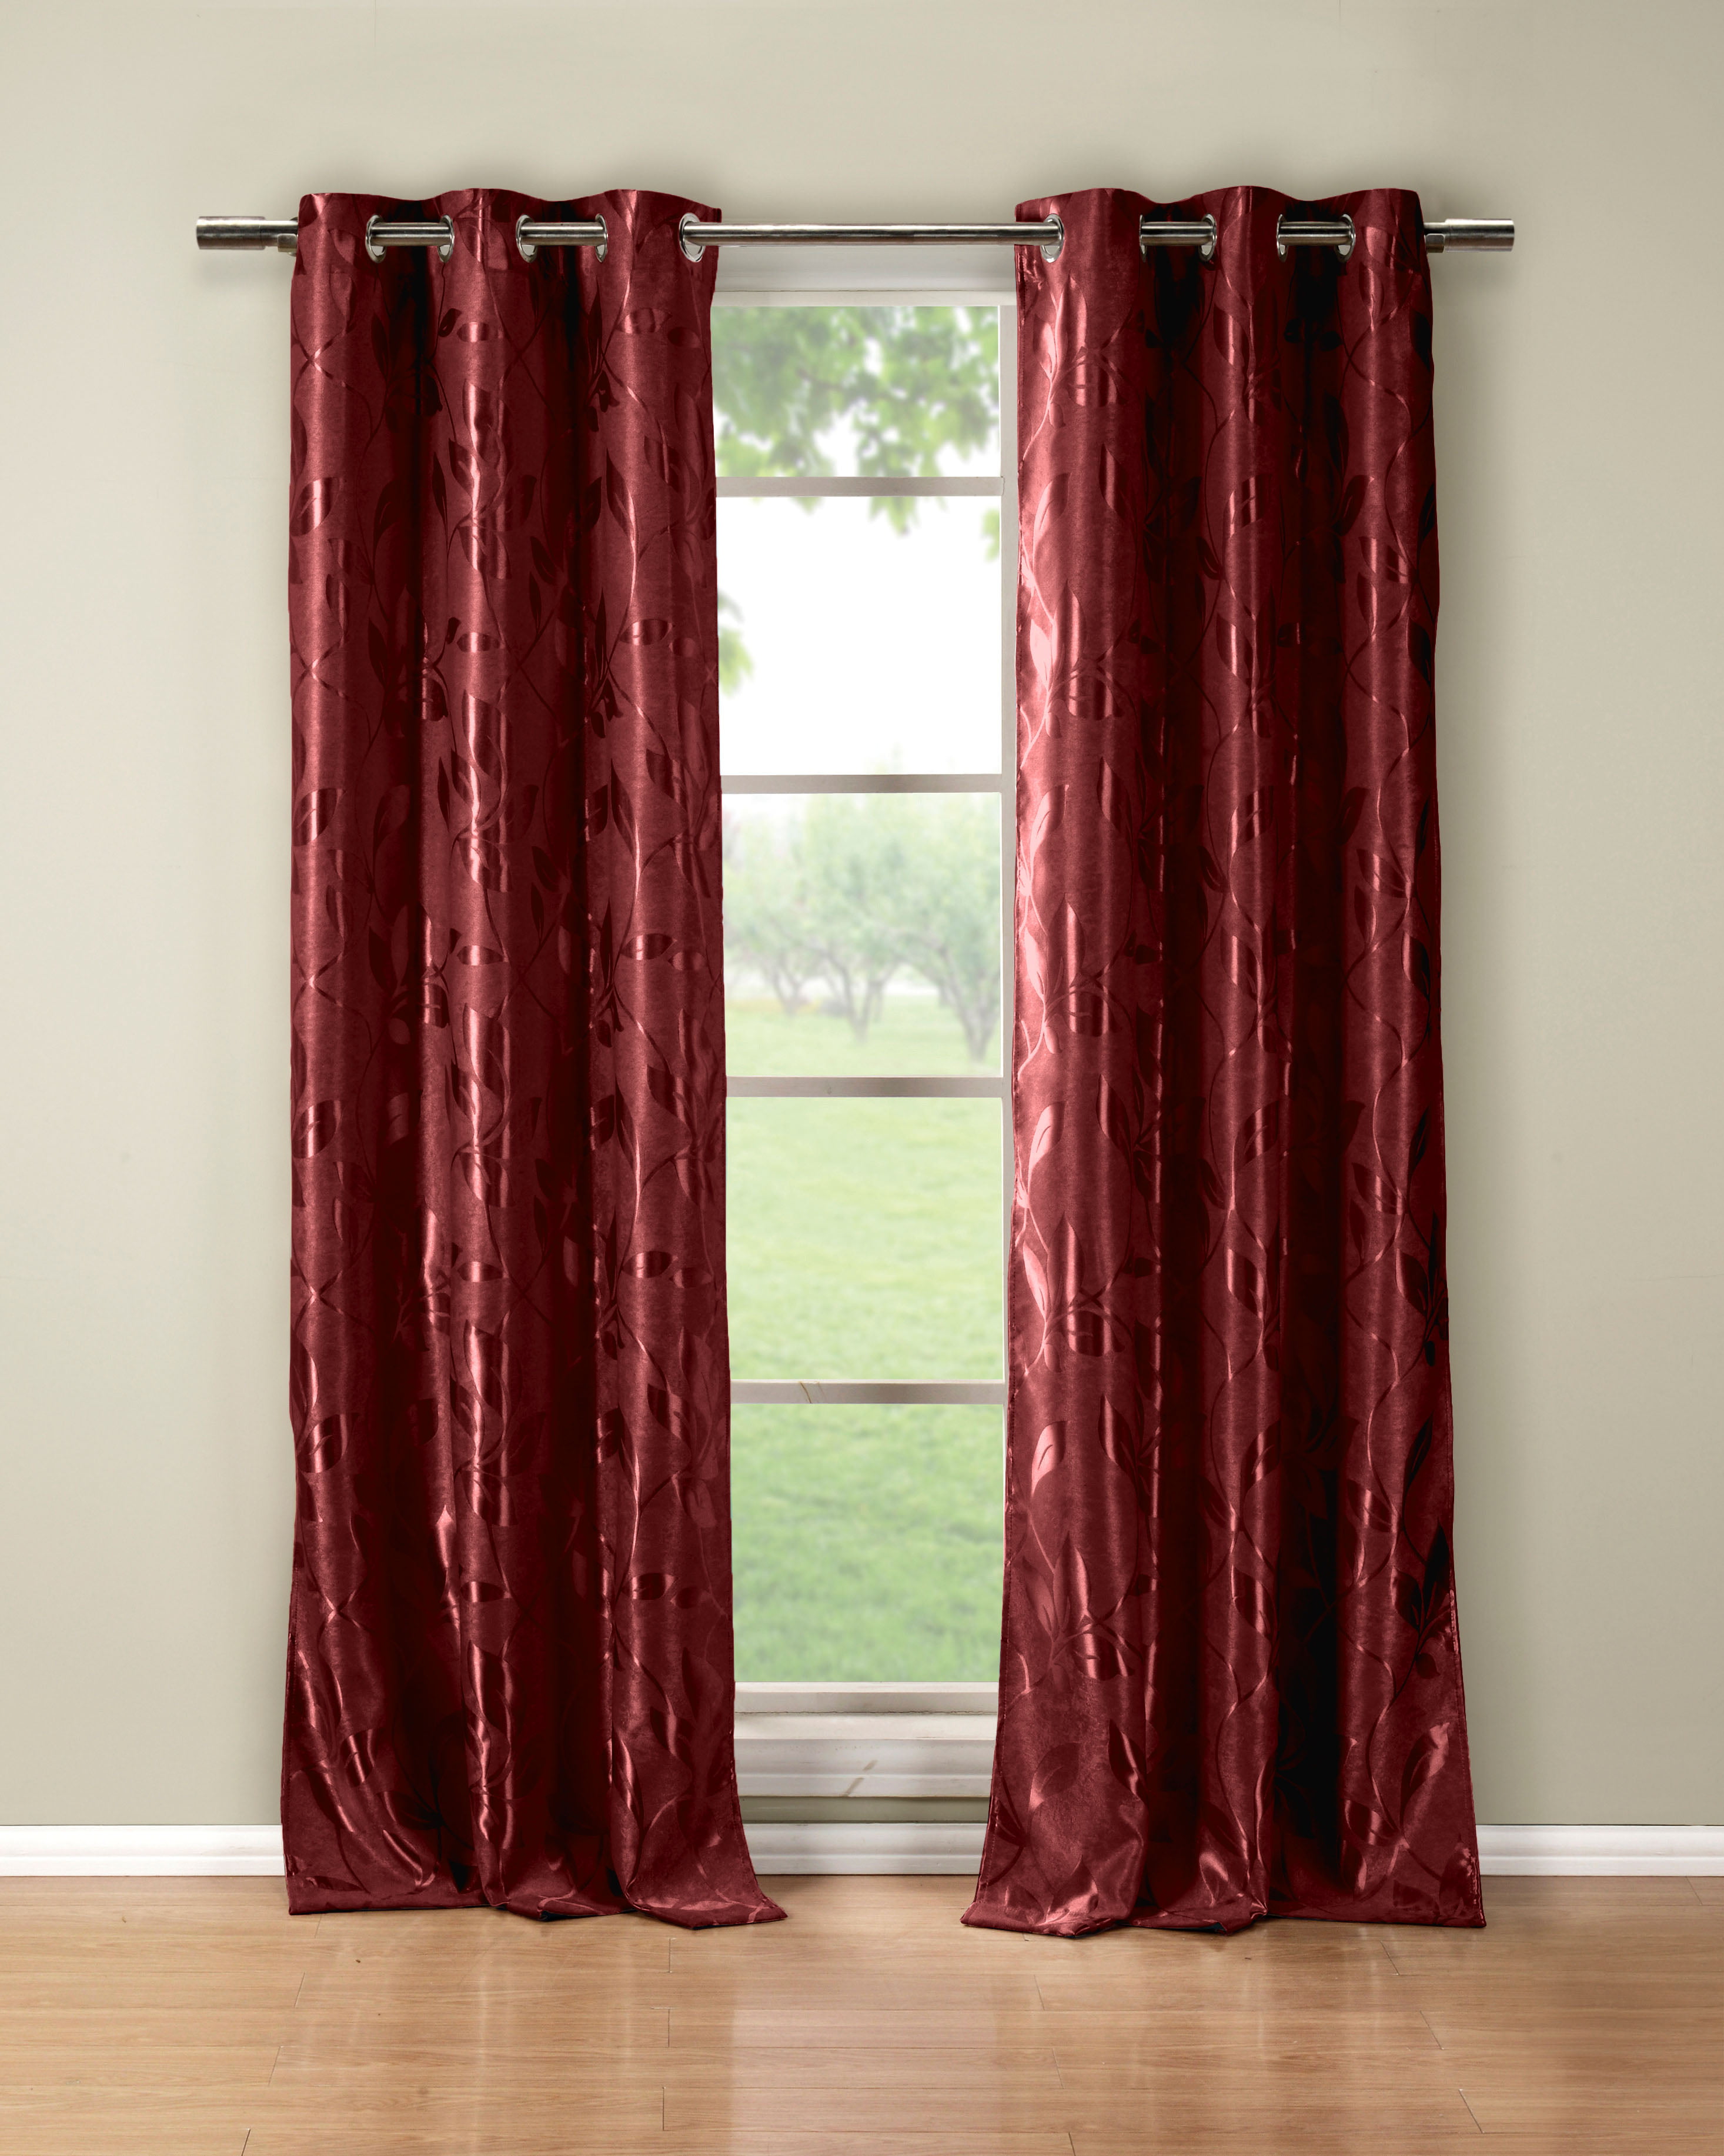 Blair Top Grommet Jacquard Window Curtain Panel 100% Polyester Set Of 2 Panels 